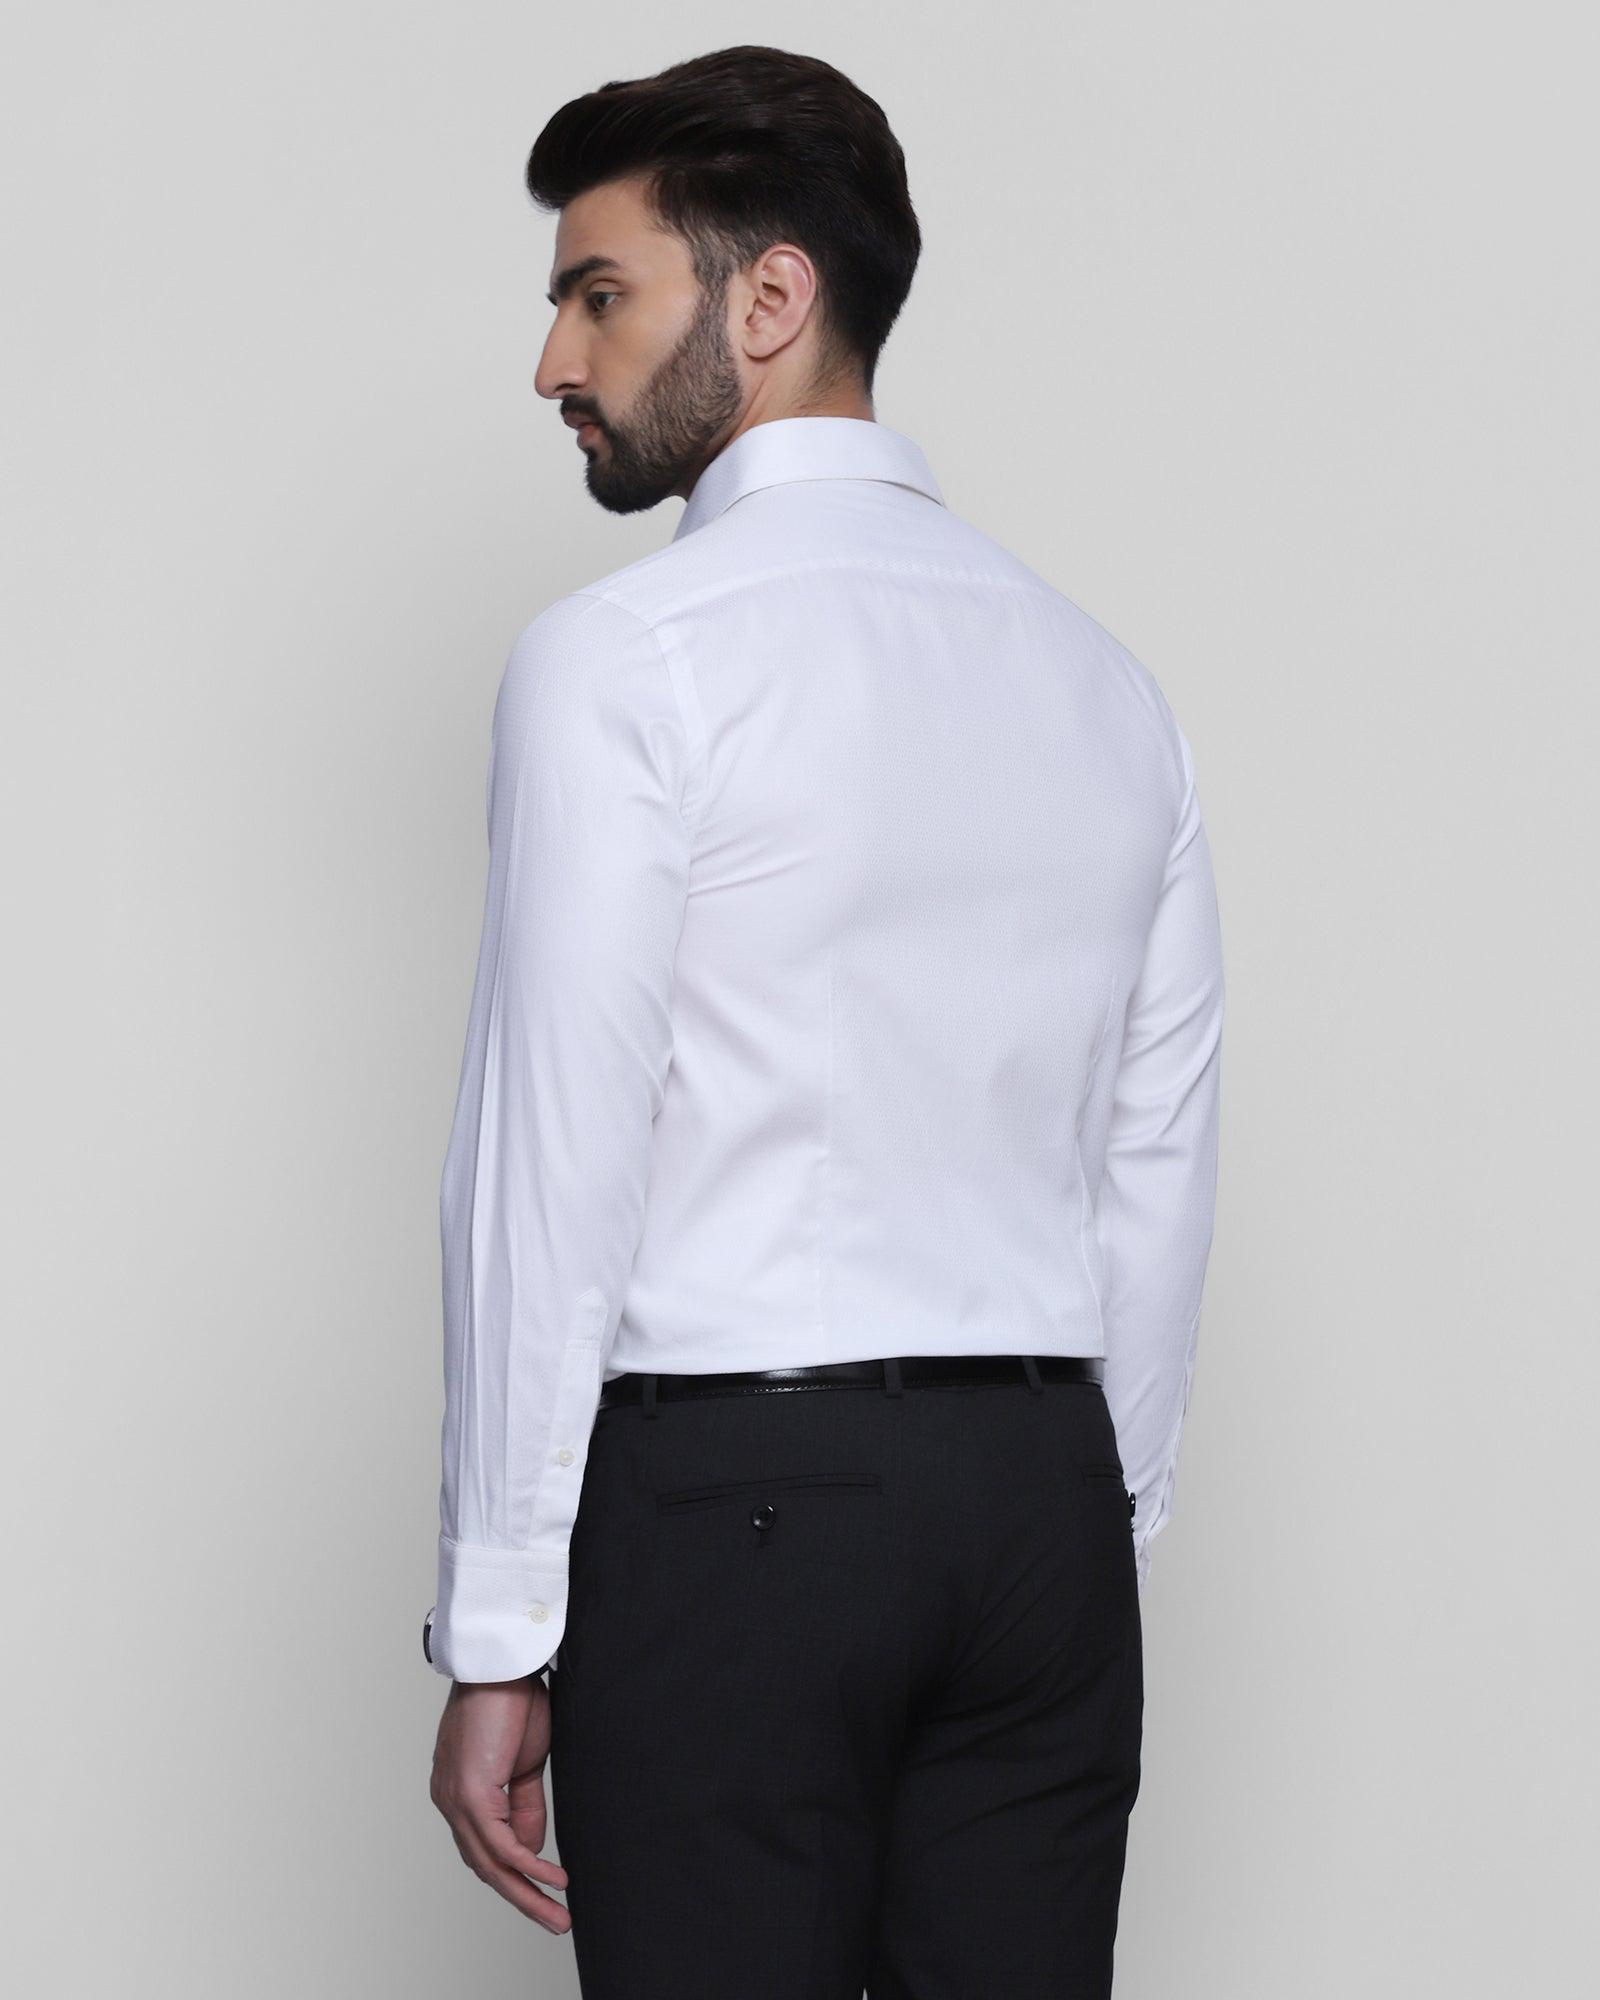 Formal White Textured Shirt - George